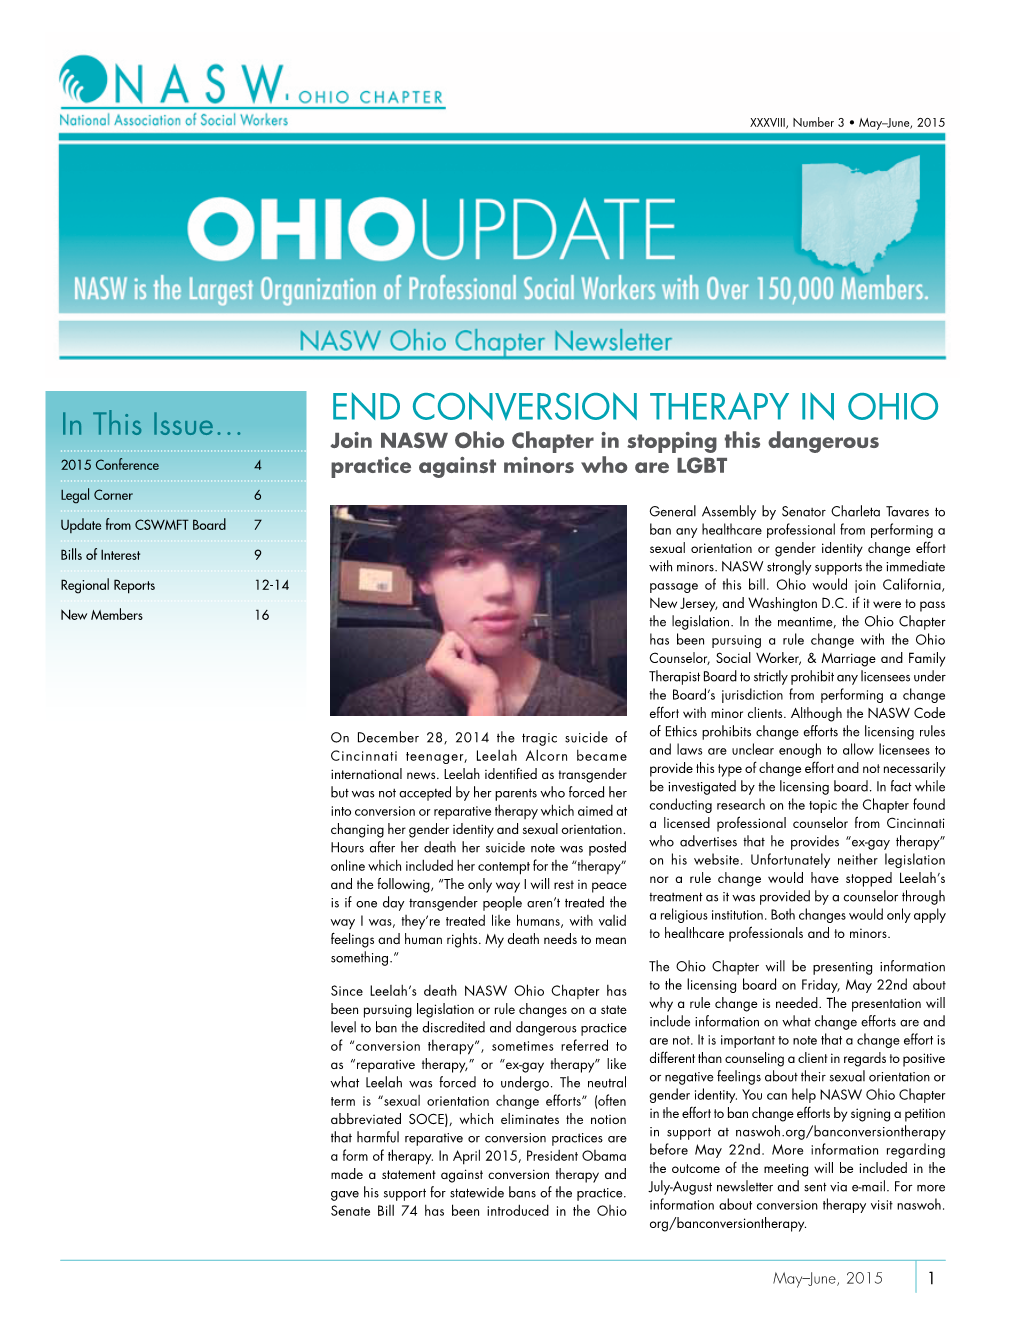 END Conversion Therapy in OHIO